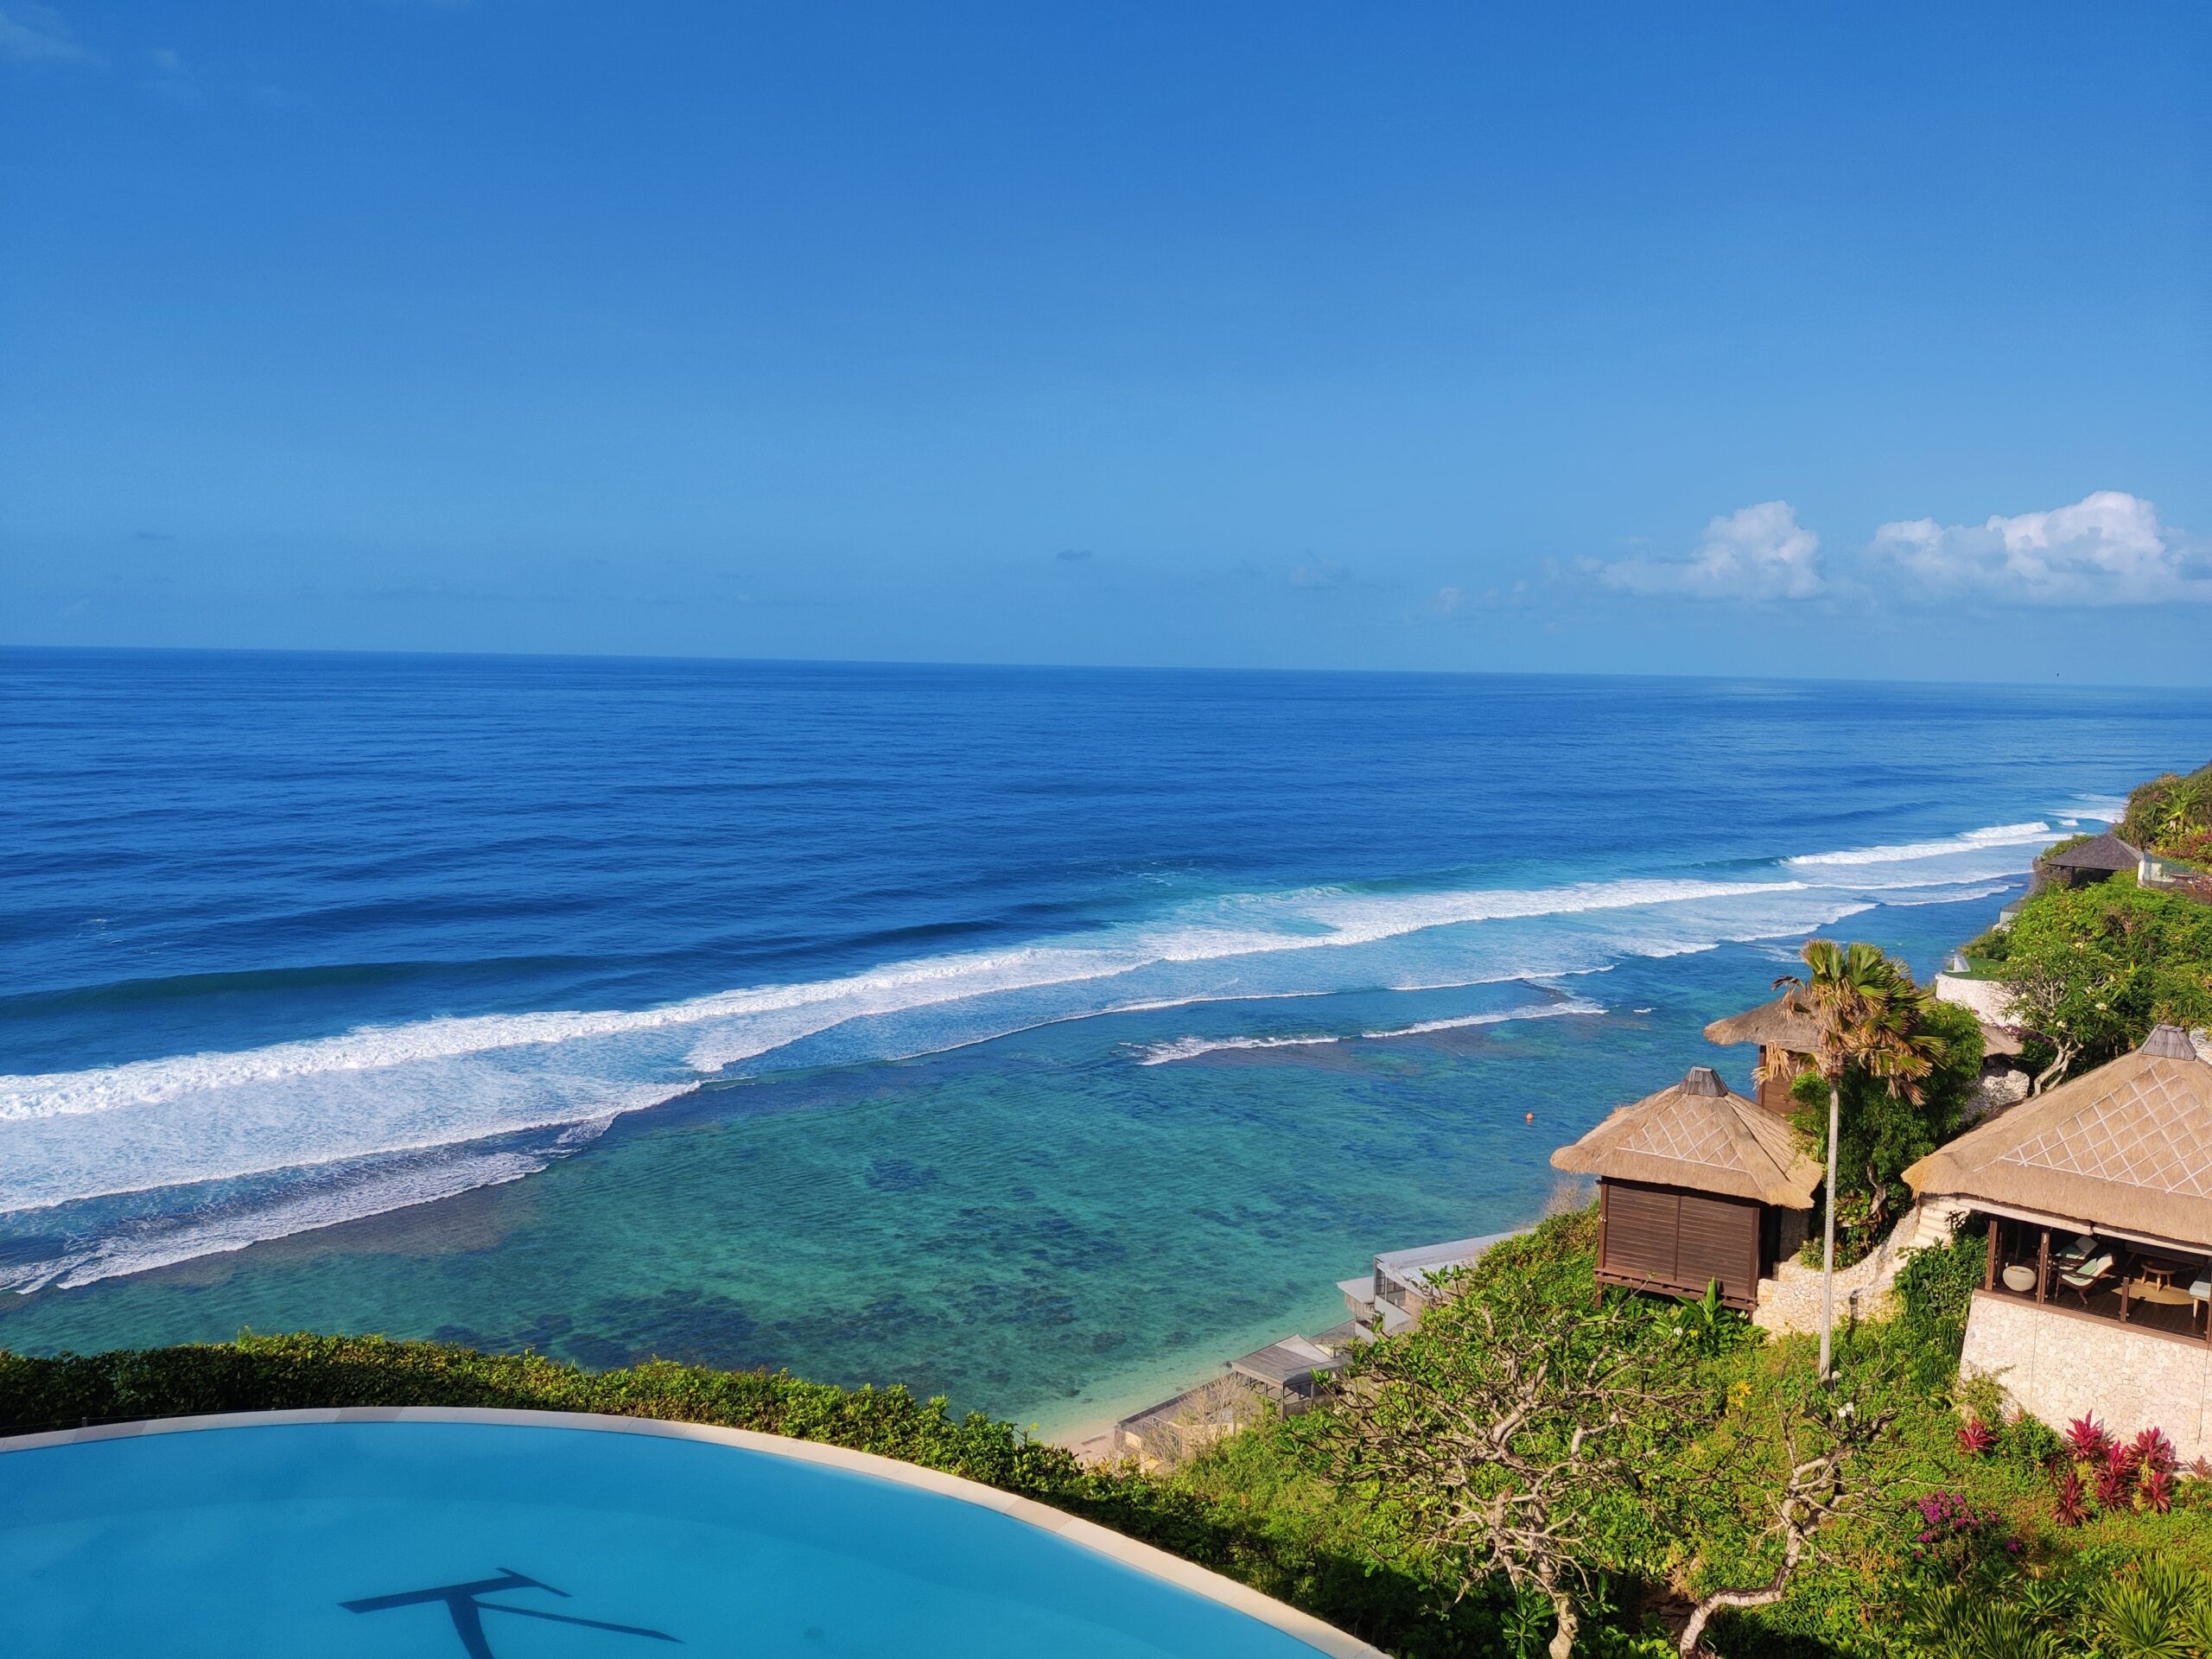 Daya Tarik Objek Wisata Pantai Karma Khandara di Denpasar Bali